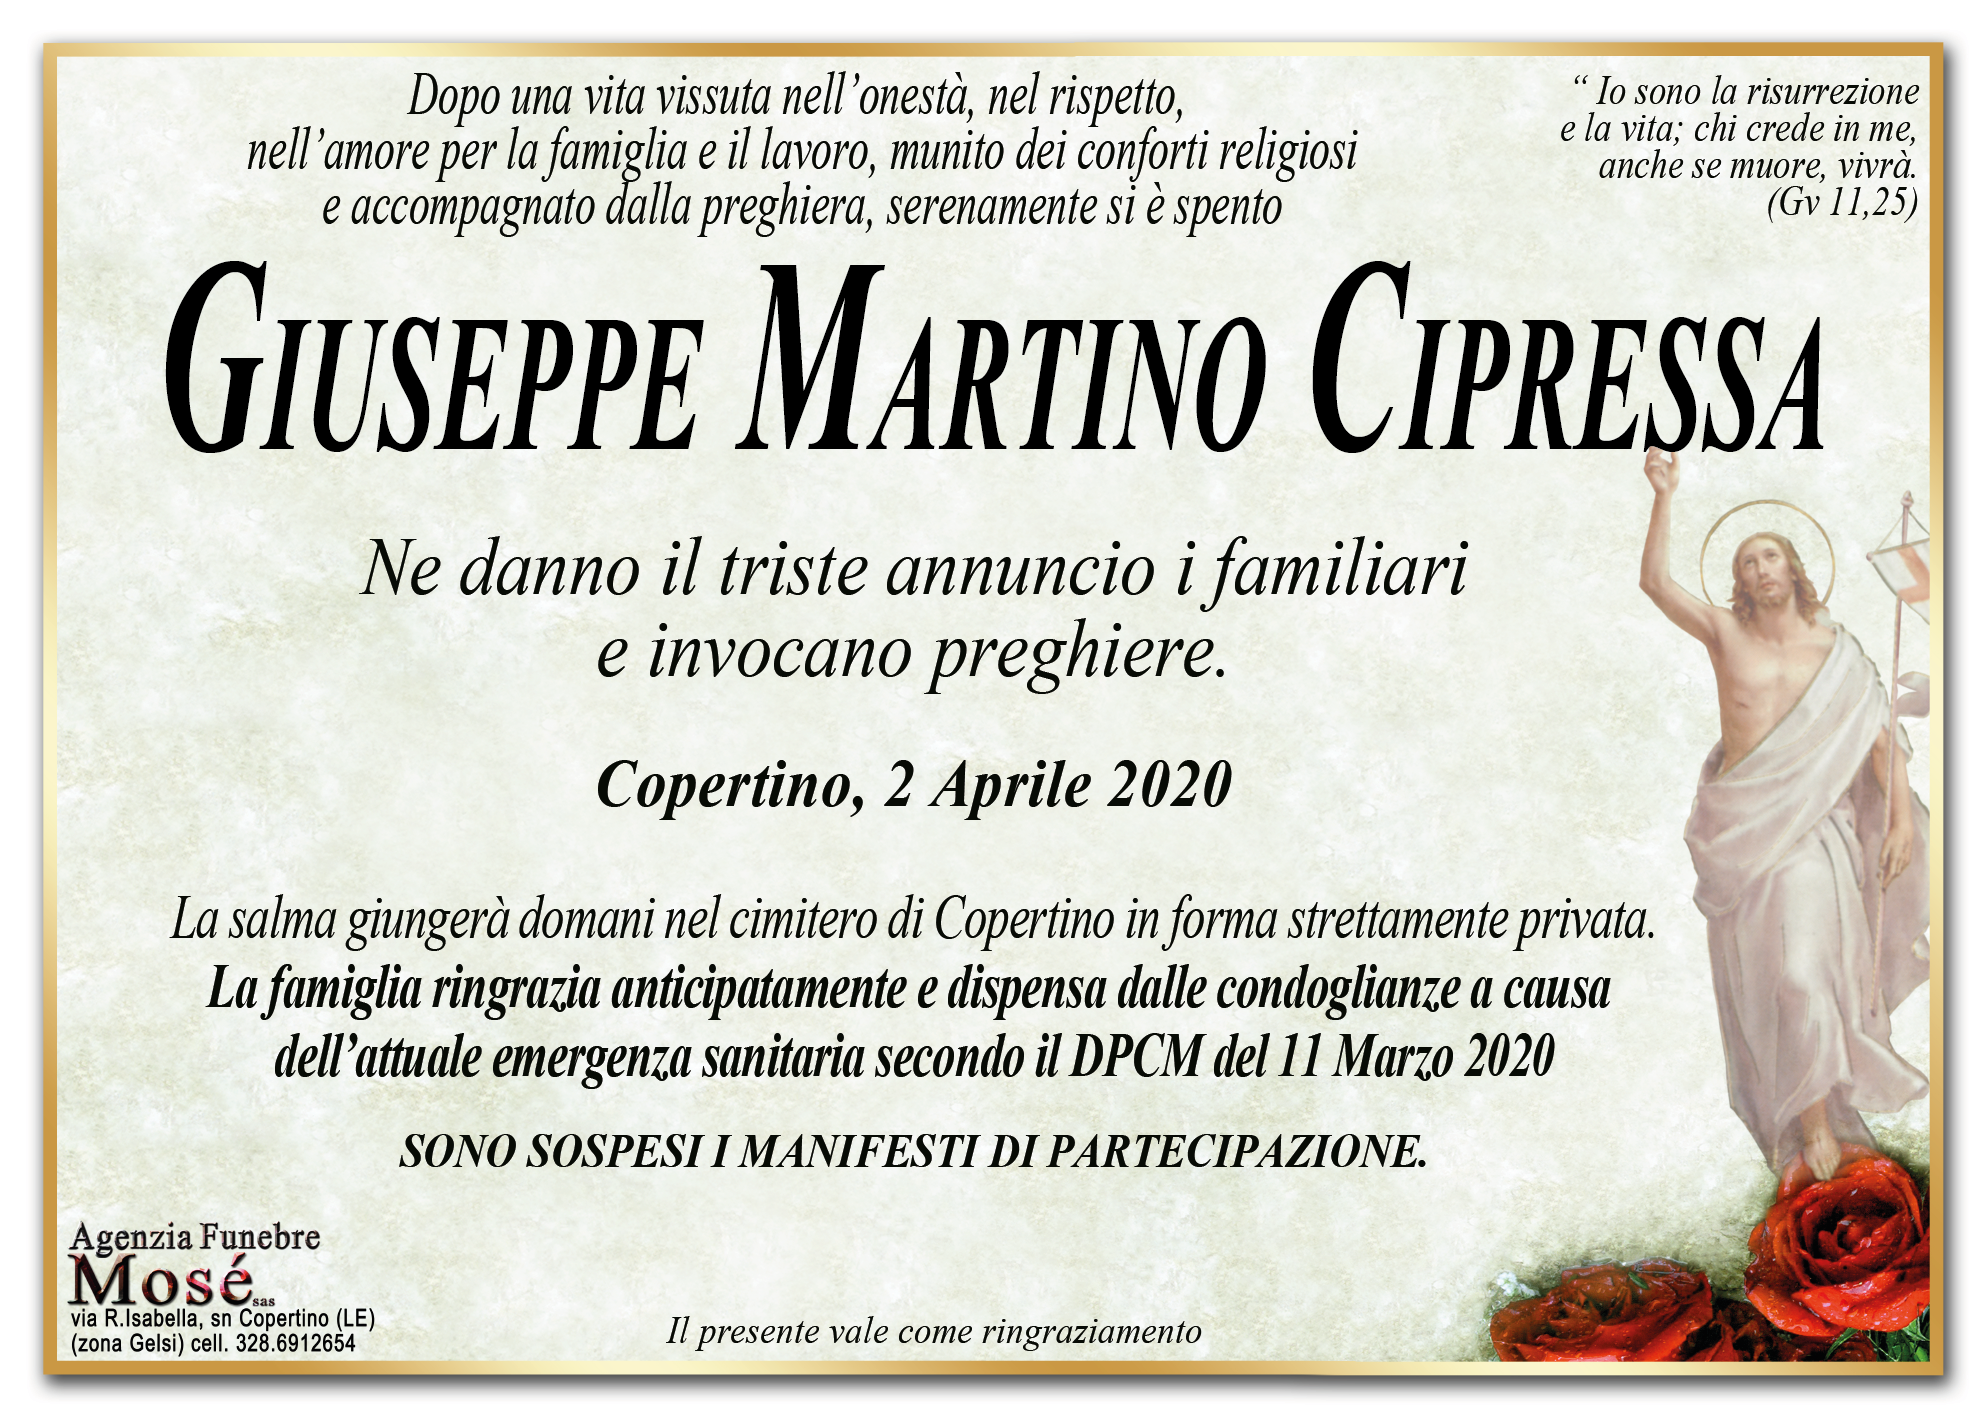 Giuseppe Martino Cipressa